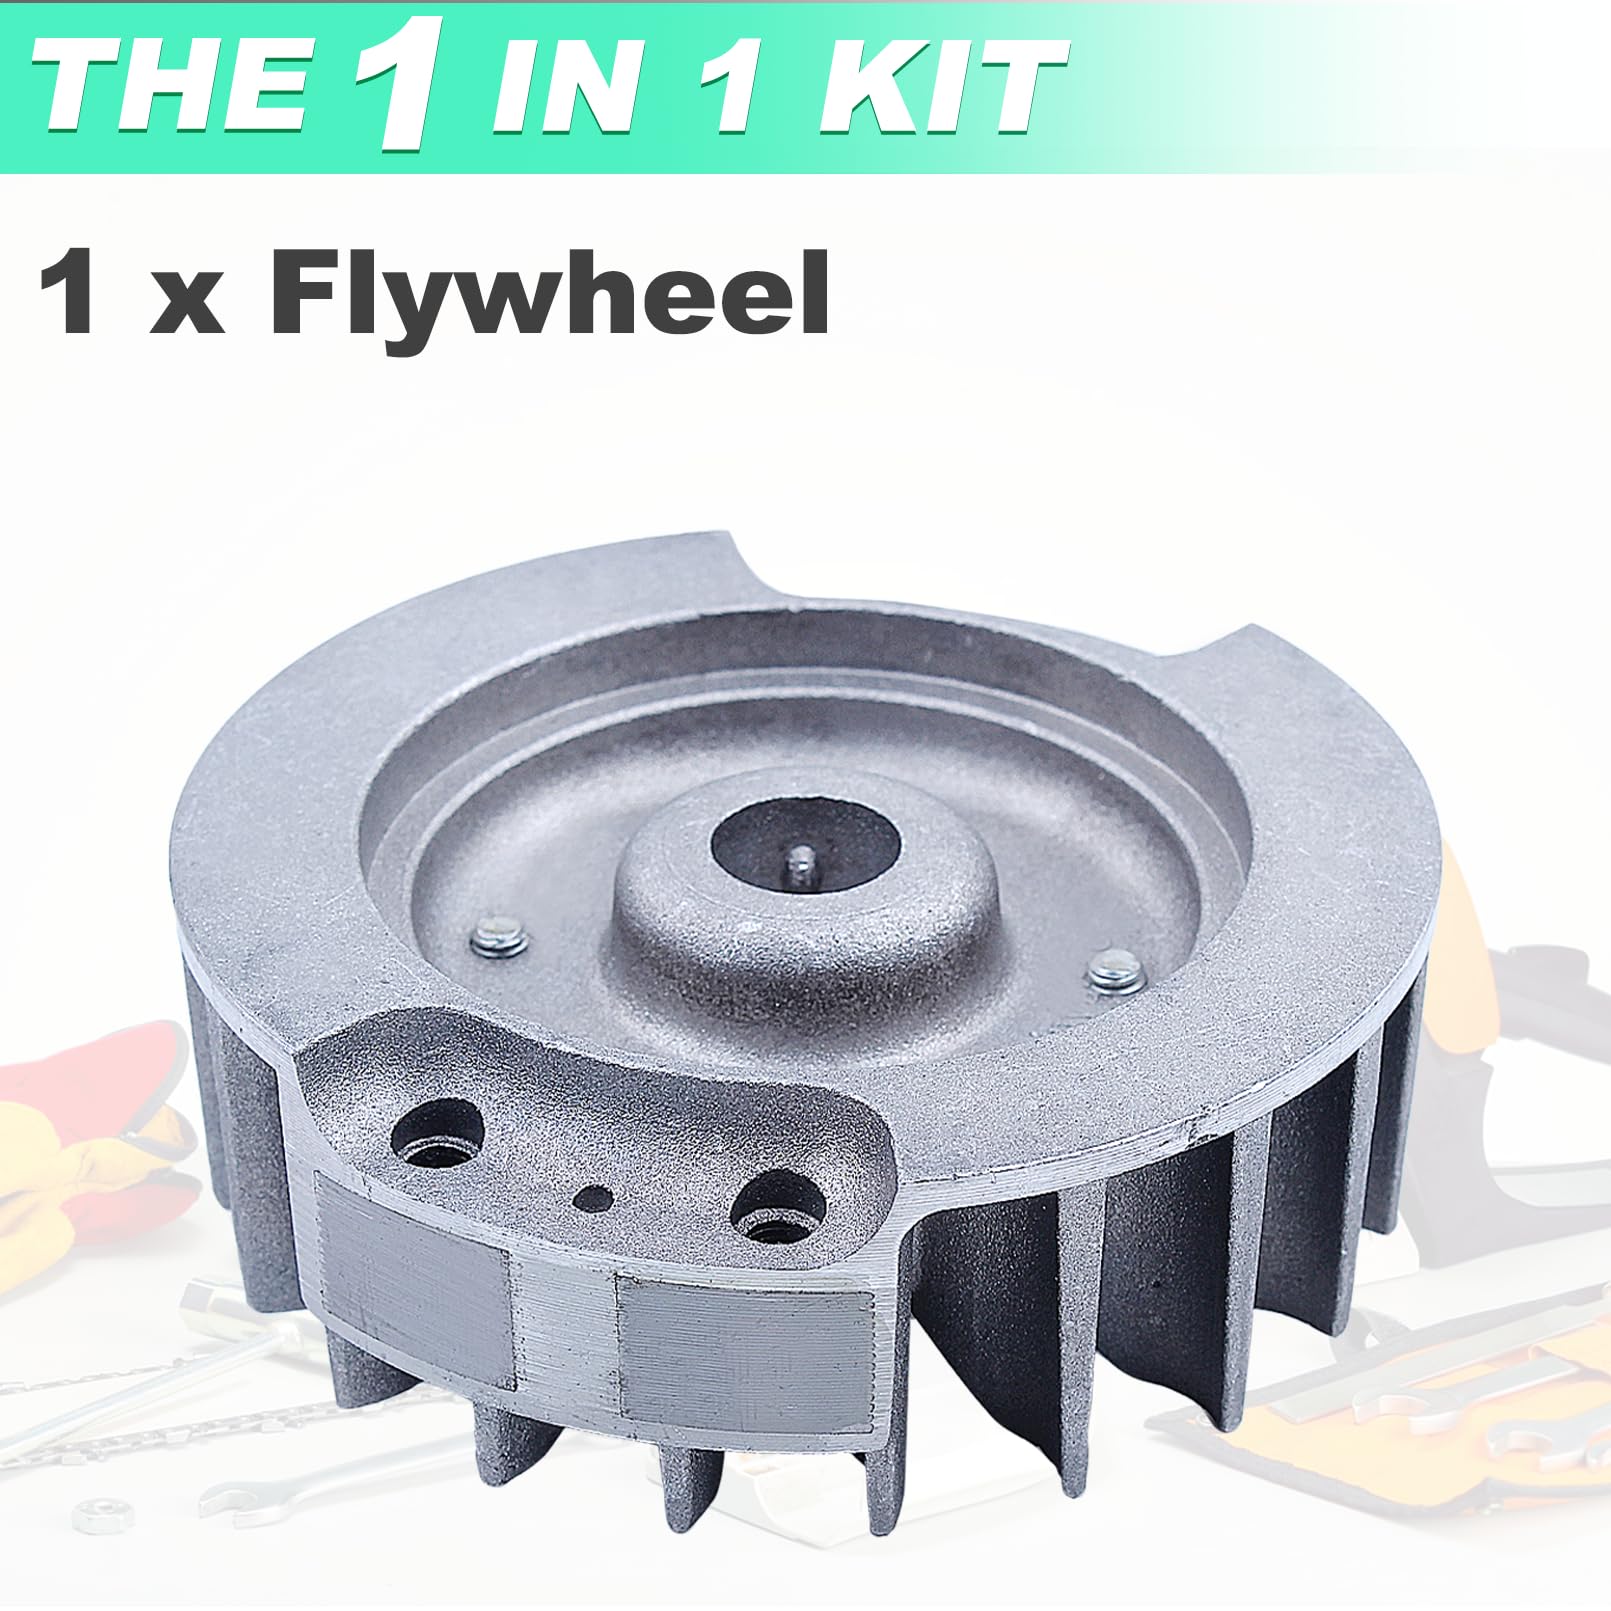 Adefol Flywheel Assembly for HUSQVARNA 445 445E 450 450E Gas Chainsaw #544 11 18-01